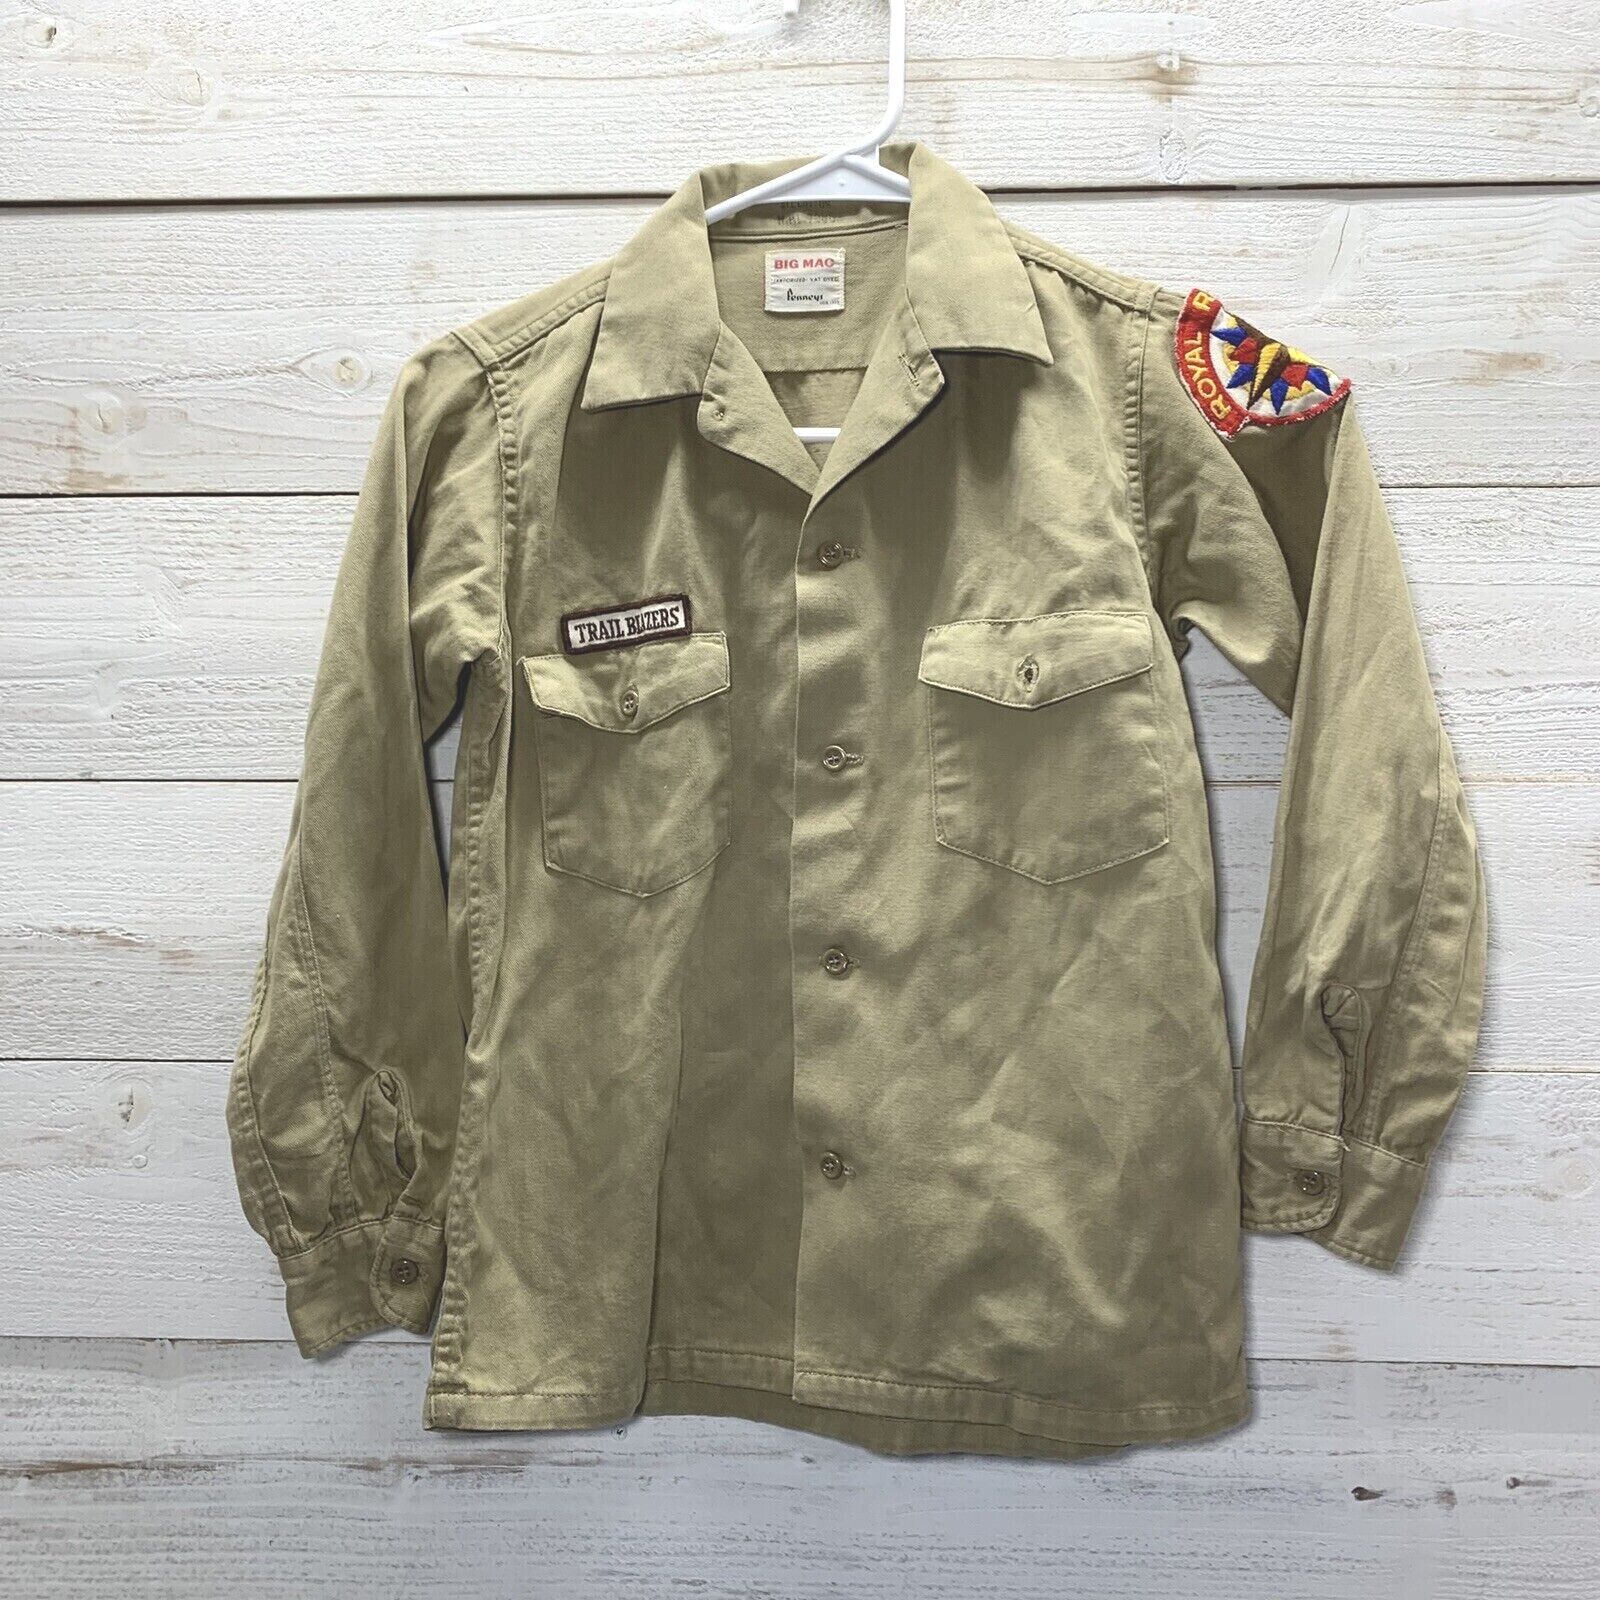 Vintage Big Mac Royal Rangers / Trail Blazers Sz12 Uniform Shirt With Patches